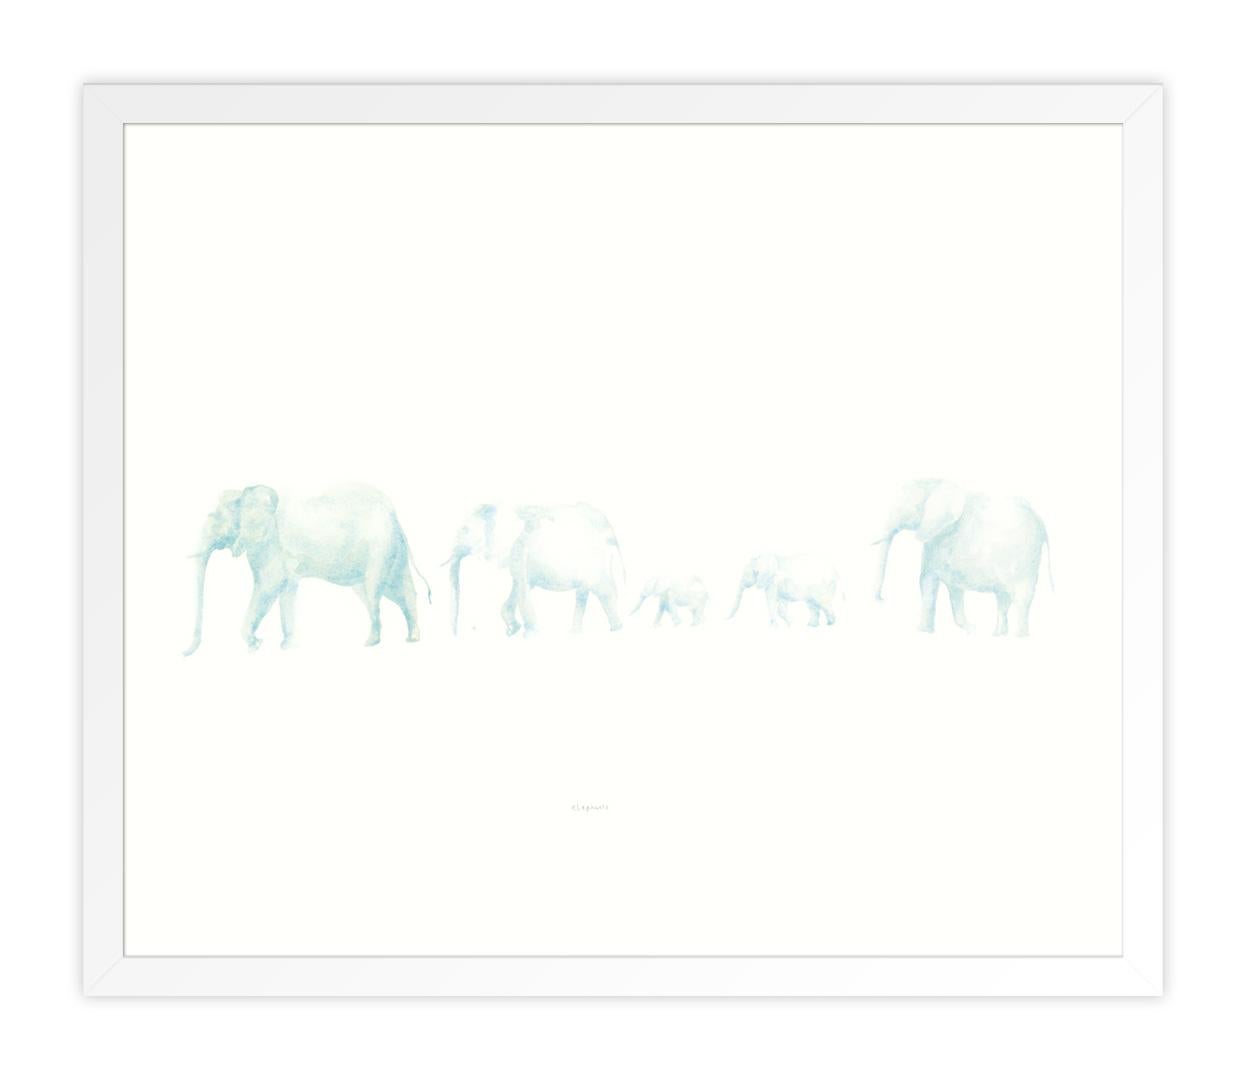 Walking Elephants - White Animal Print by Frances Tulk-Hart